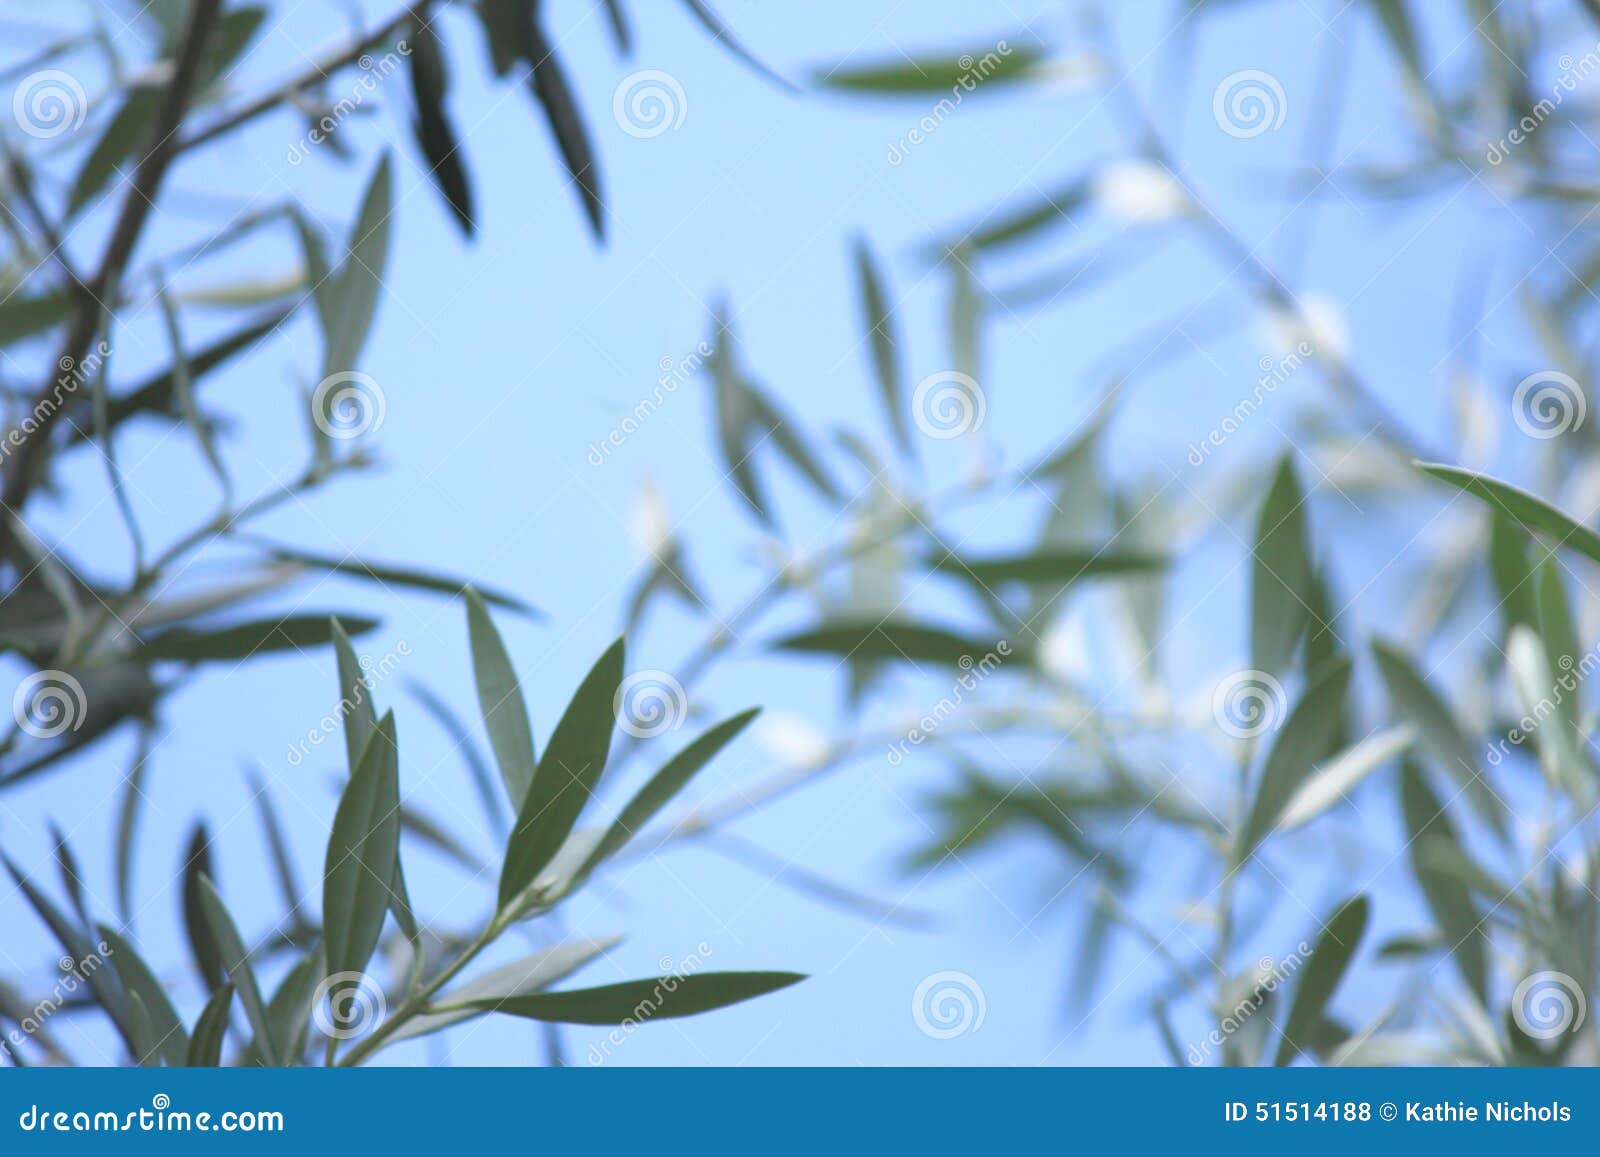 Zachte nadruk Olive Leaf Leaves met blauwe hemelachtergrond 1. Mooie groene olijfboombladeren met de zachte achtergrond van de nadruk blauwe hemel